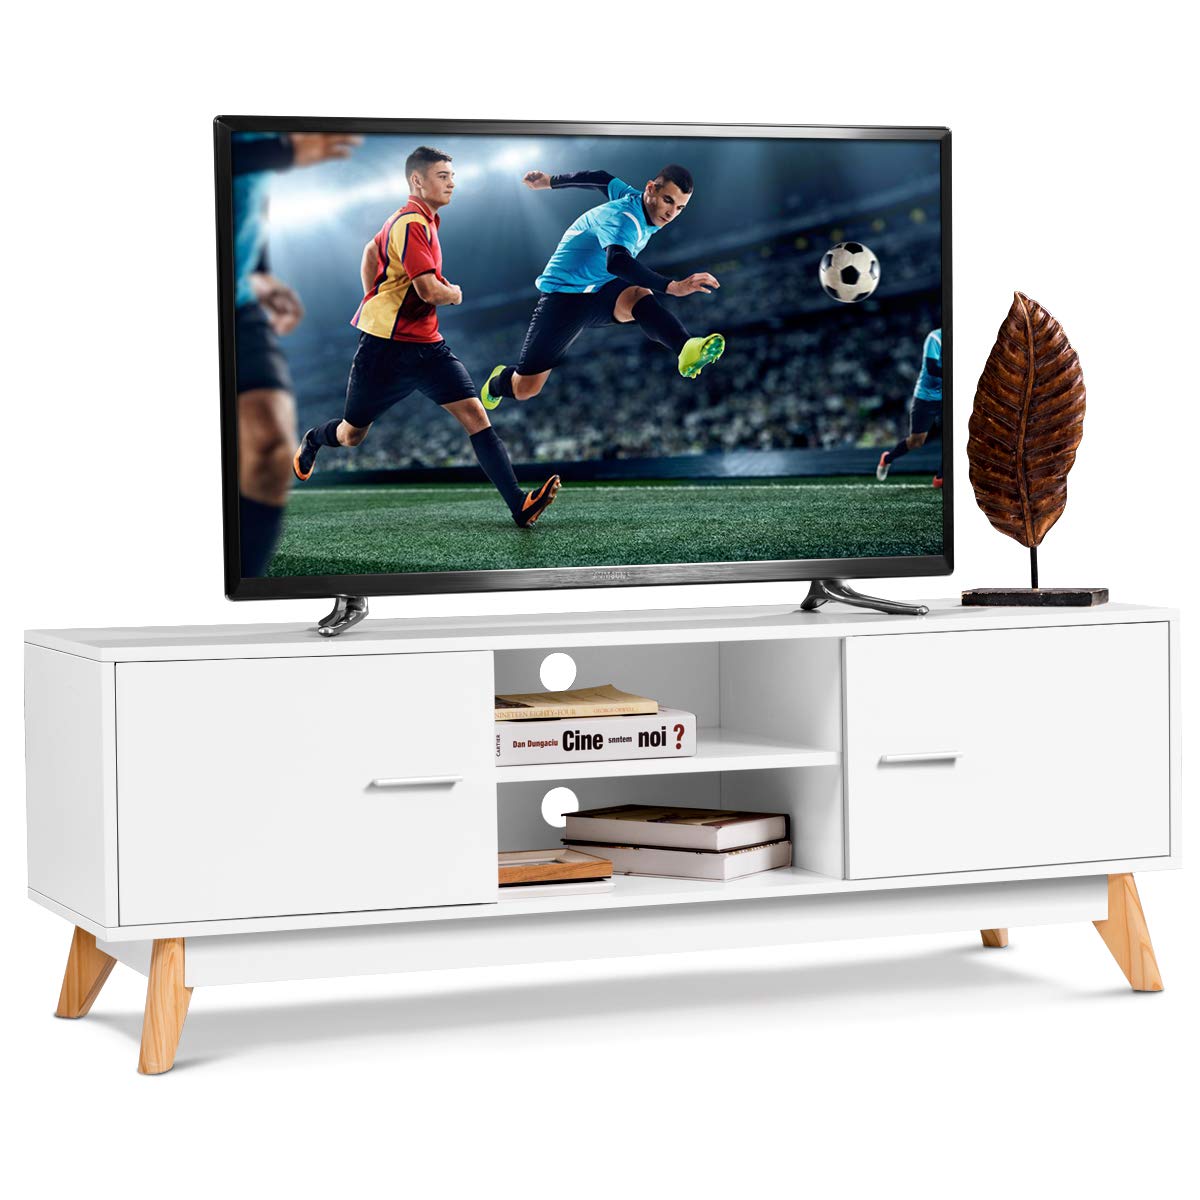 Giantex TV Stand for 60" TVs, 140cm TV Cabinet Entertainment Unit w/ 2 Cable Management Holes, 2 Storage Cabinets